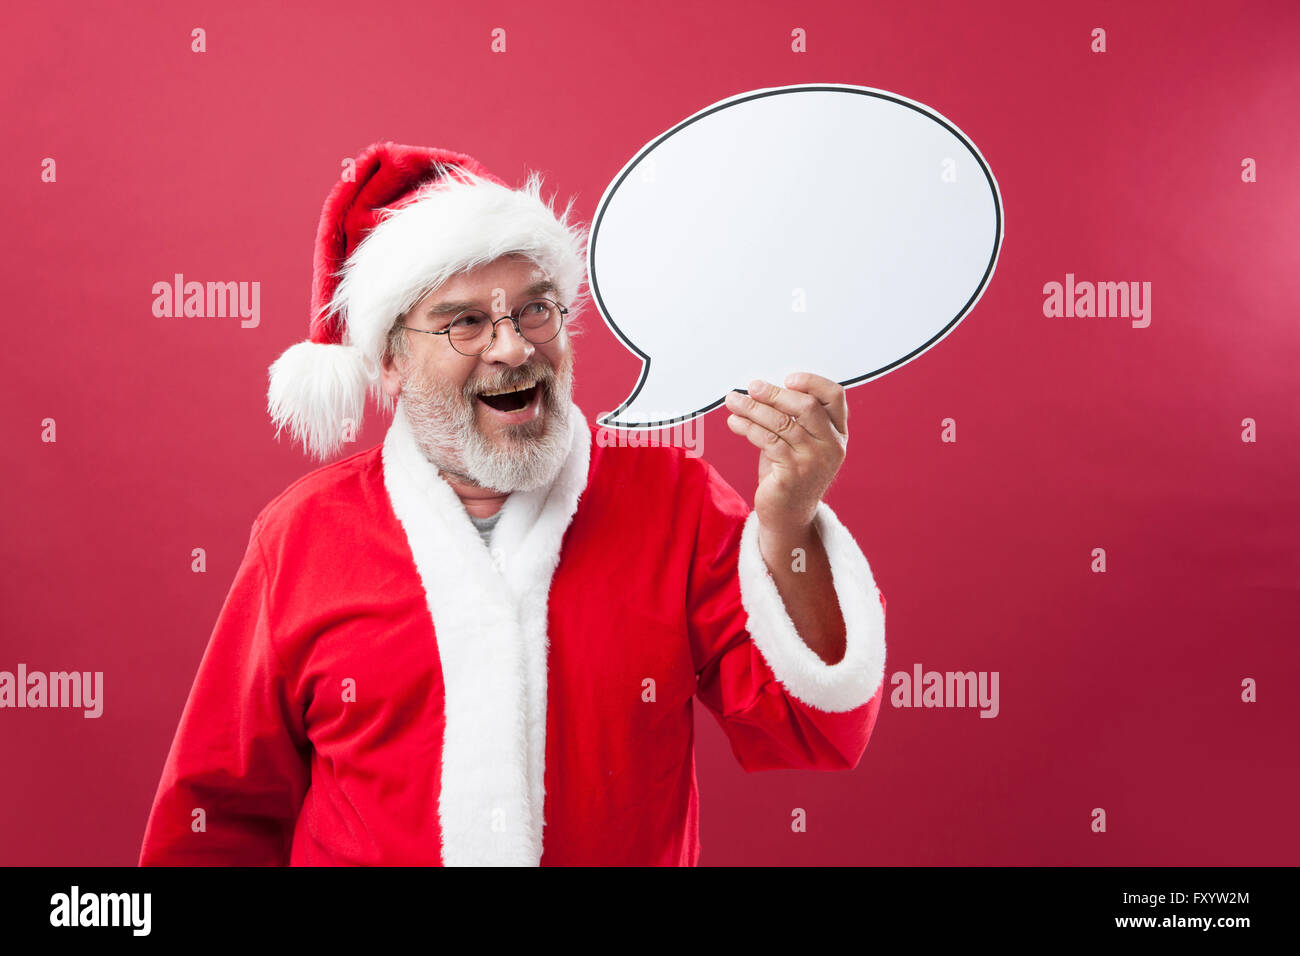 Portrait of smiling Santa Claus holding a speech balloon Stock Photo